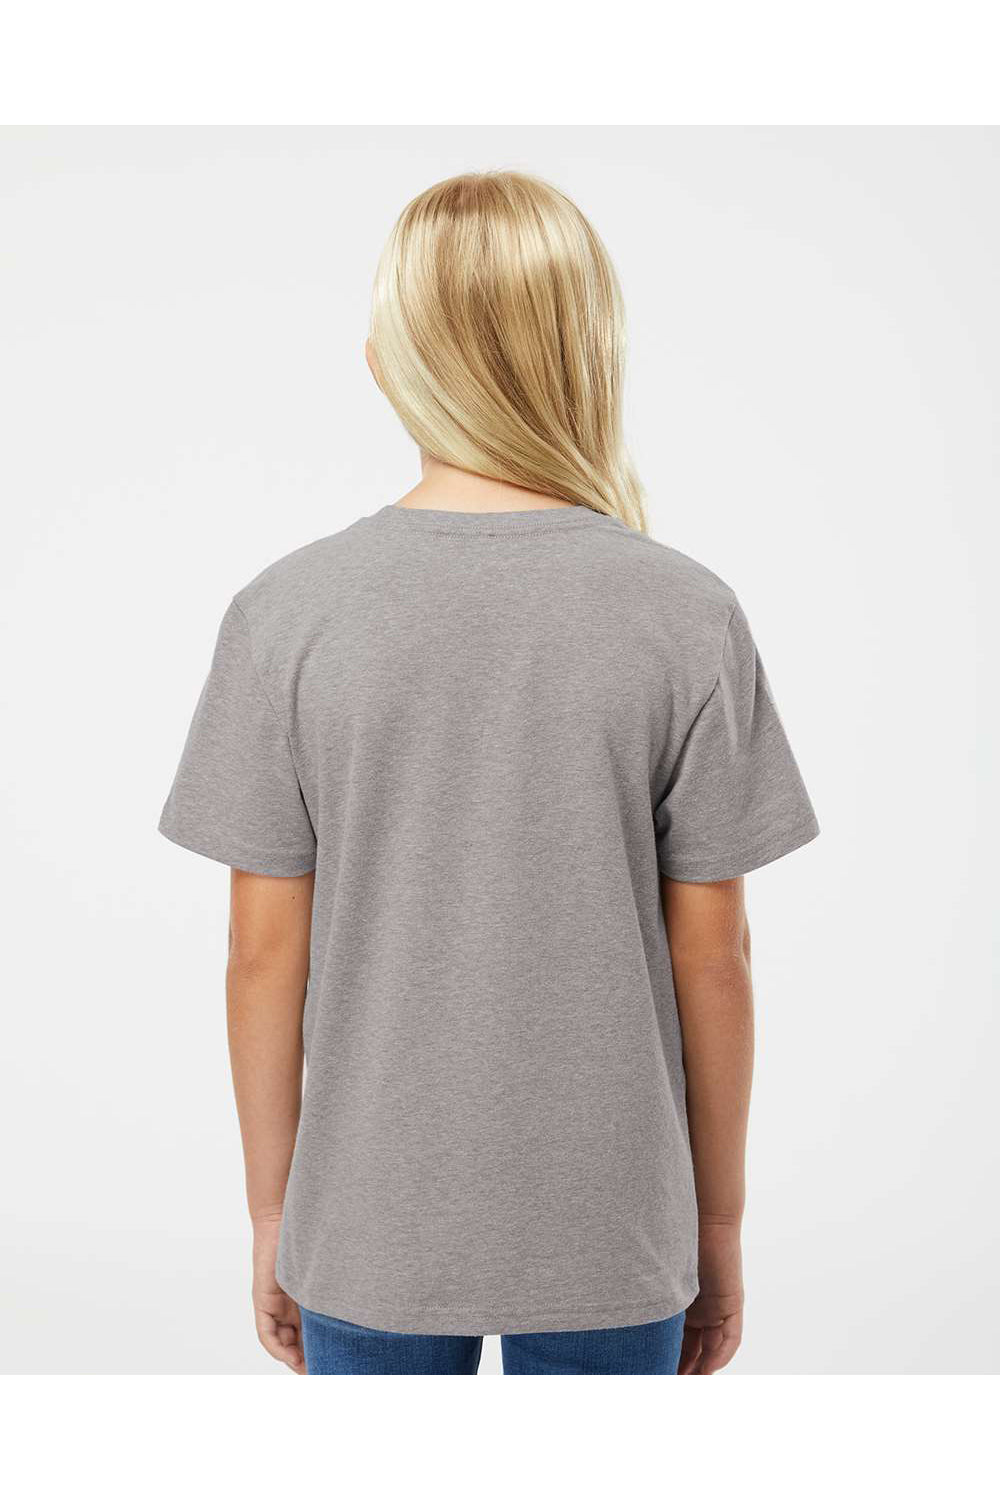 Kastlfel 2015 Youth RecycledSoft Short Sleeve Crewneck T-Shirt Steel Grey Model Back